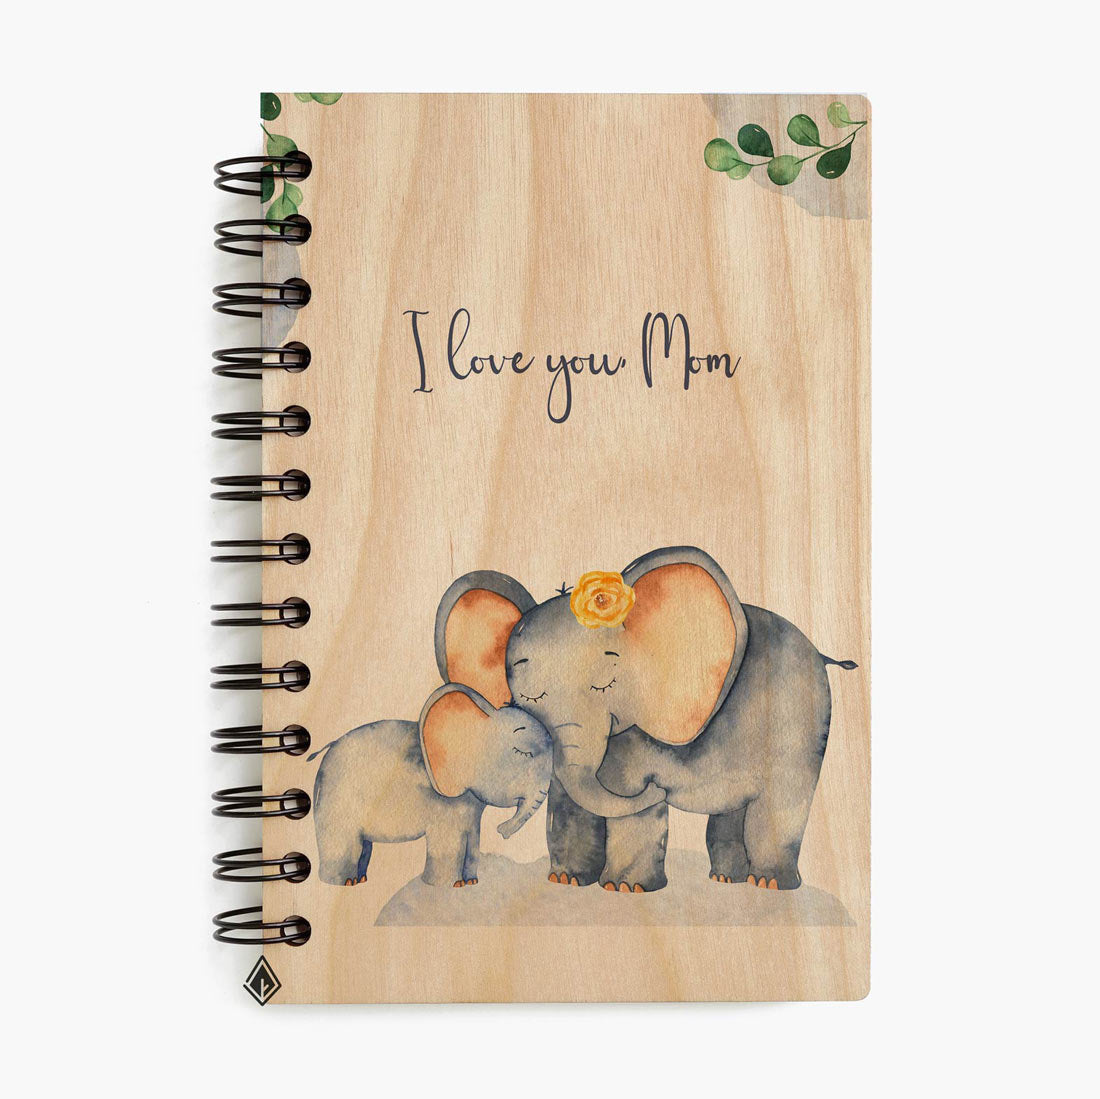 Elephants maple wooden notebook